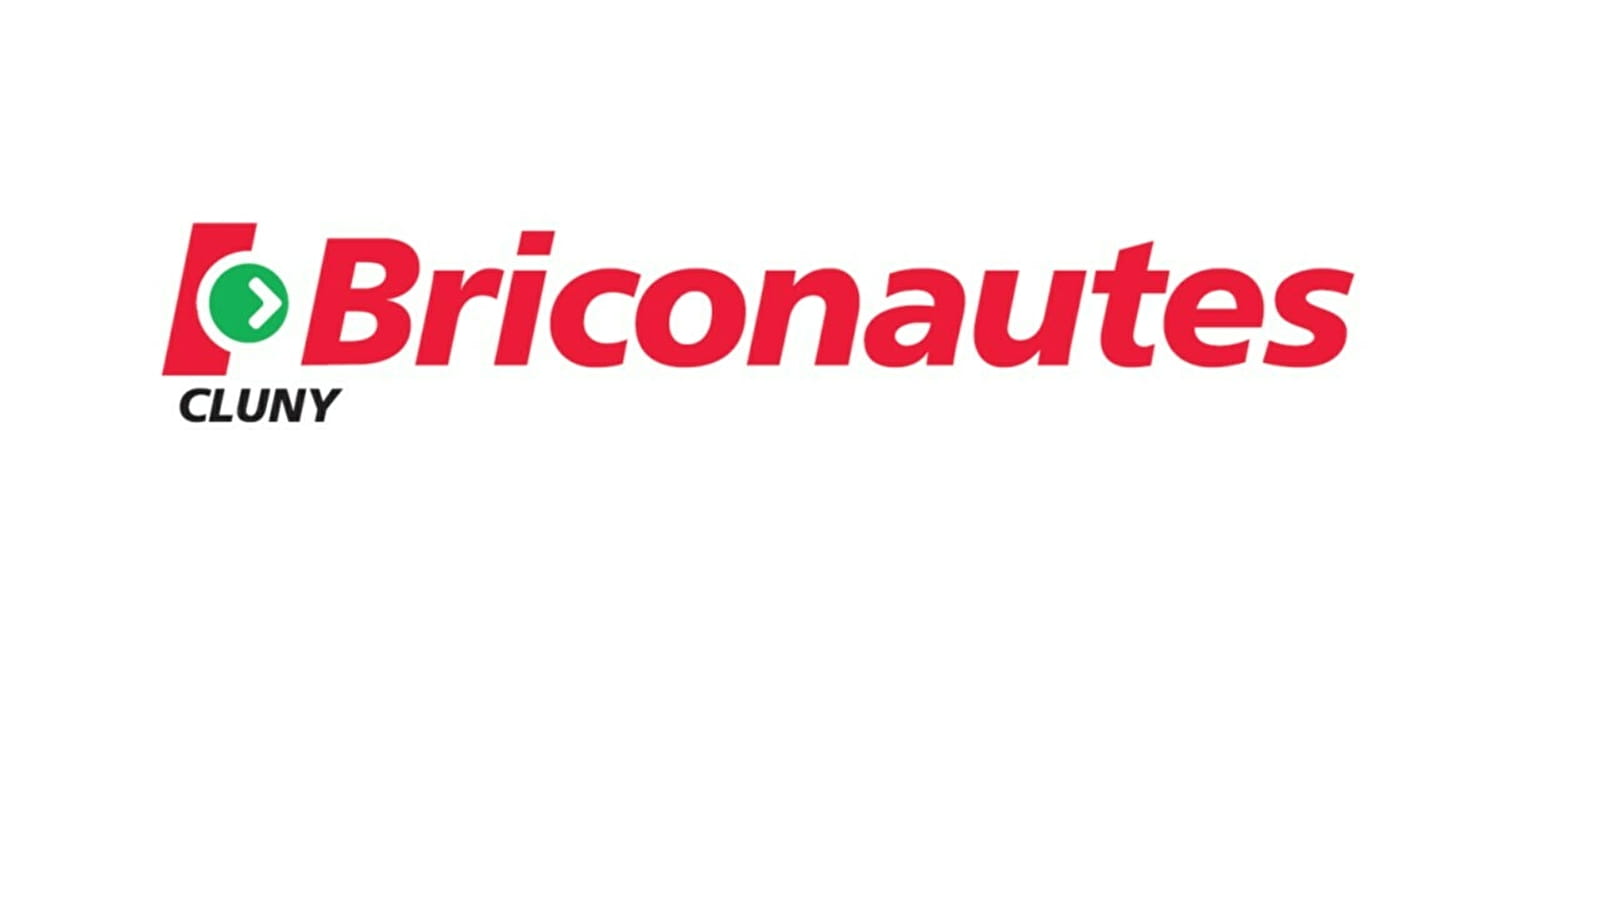 Briconautes -magasin de bricolage